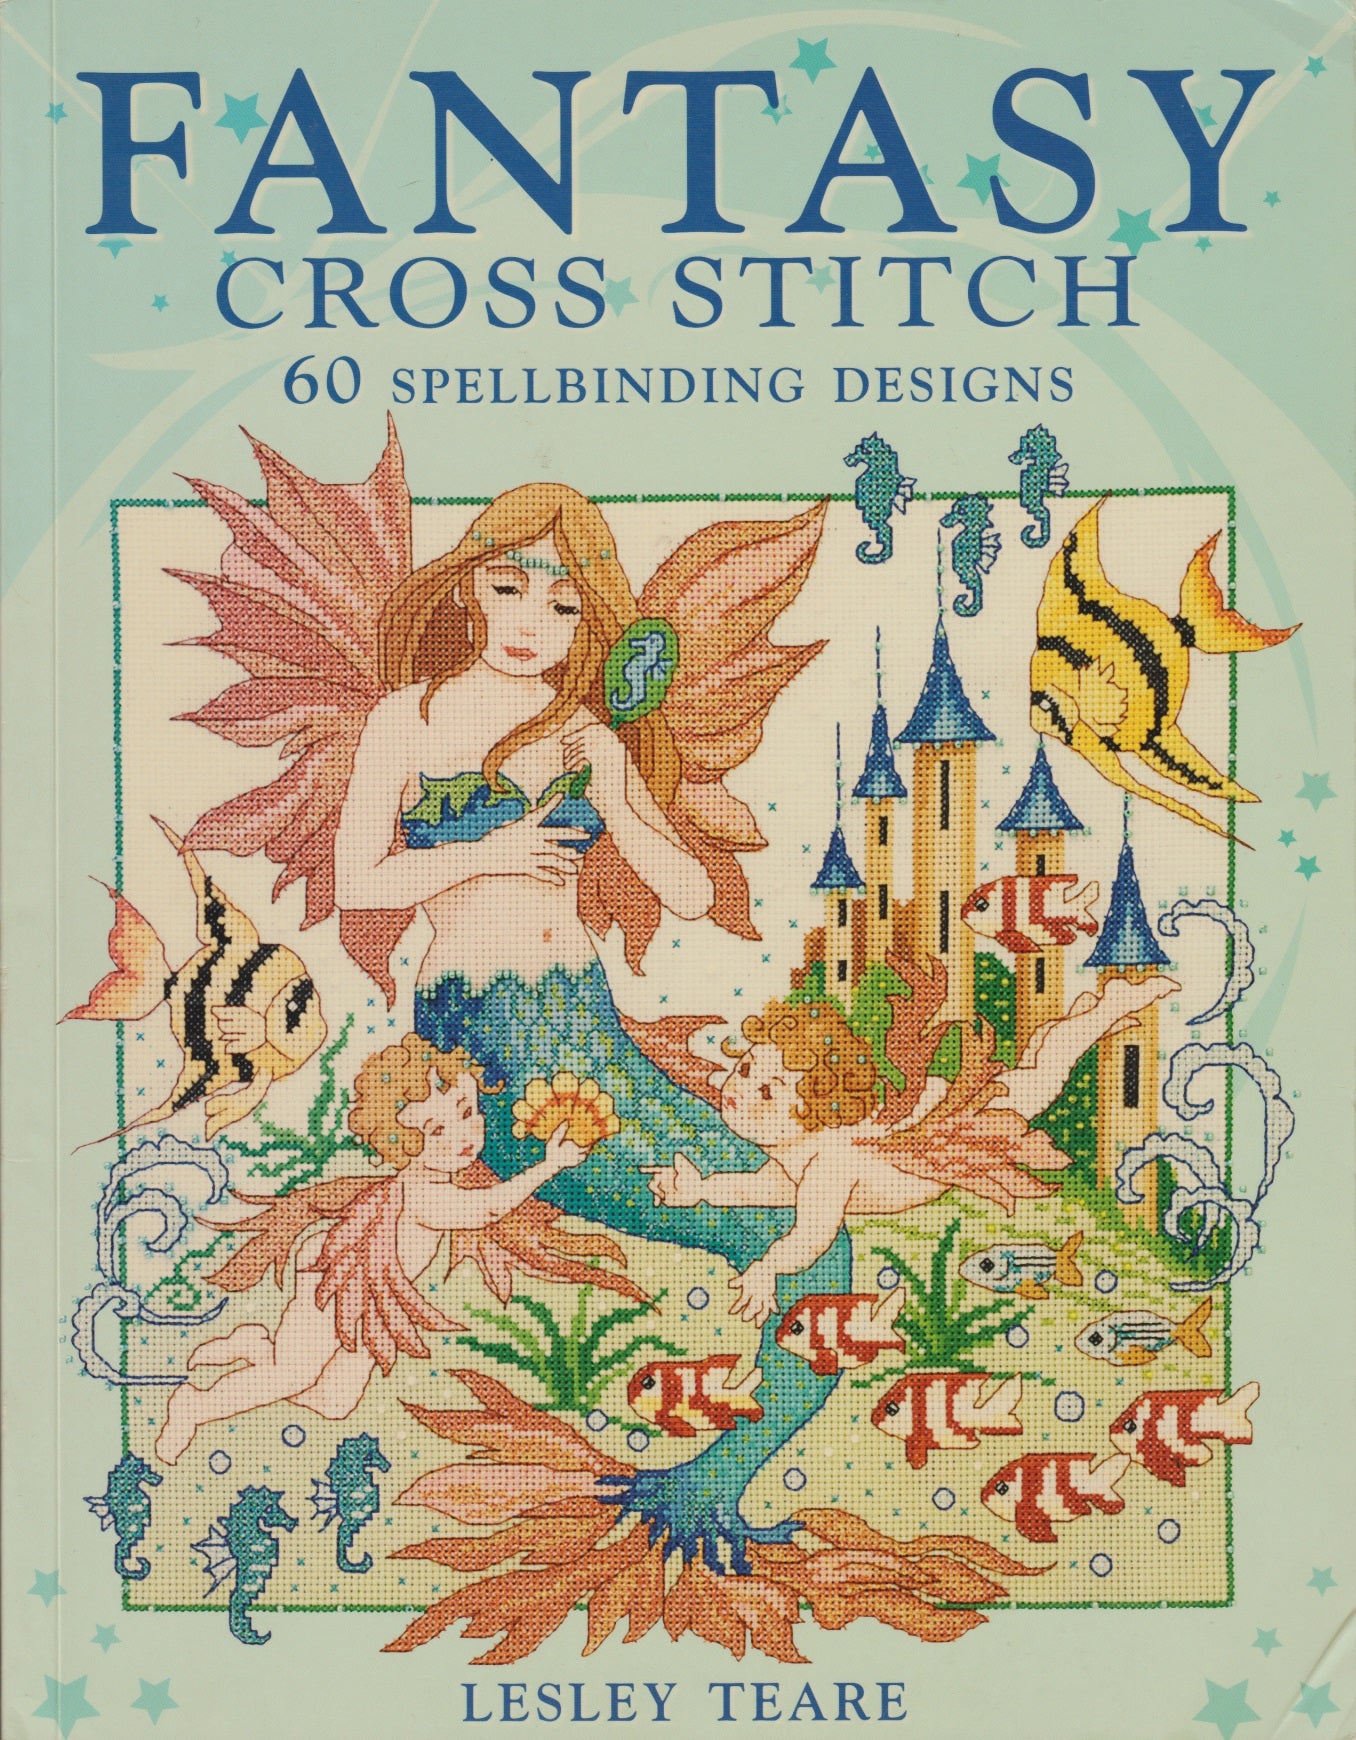 David & Charles Fantasy Cross Stitch cross stitch pattern book